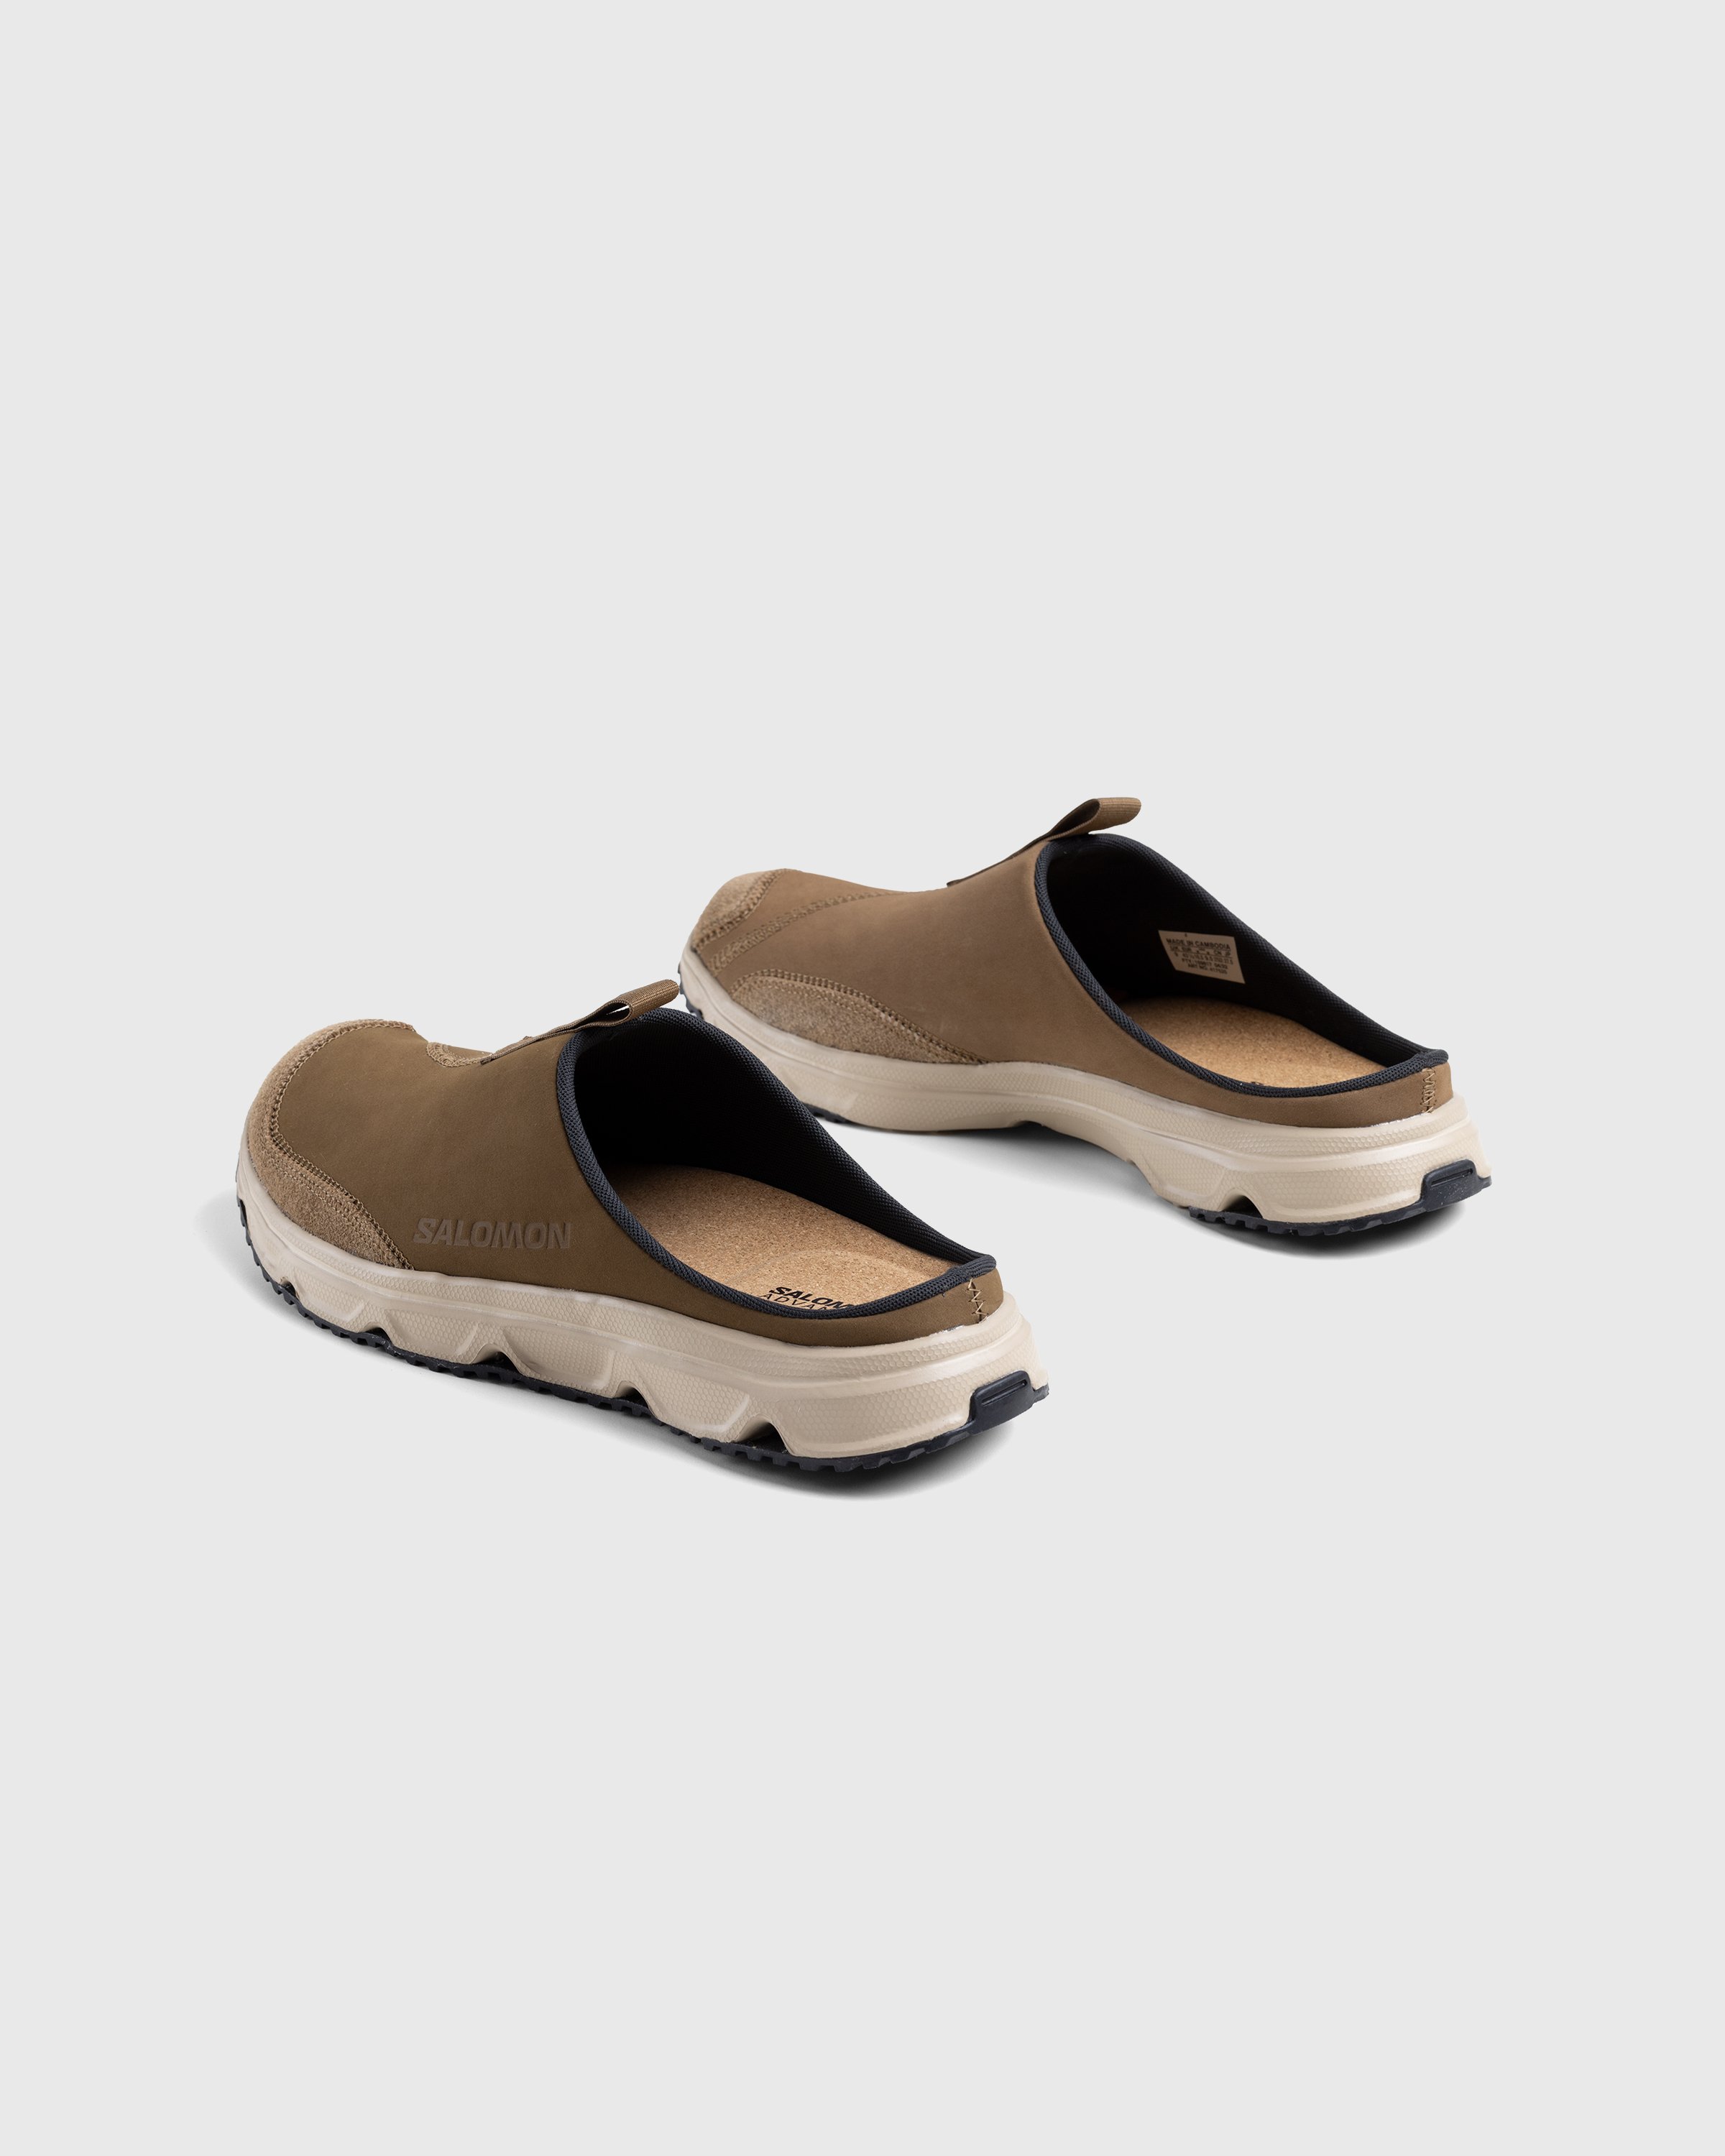 Salomon - RX Slide Leather Advanced Kang/Safari - Footwear - Beige - Image 4